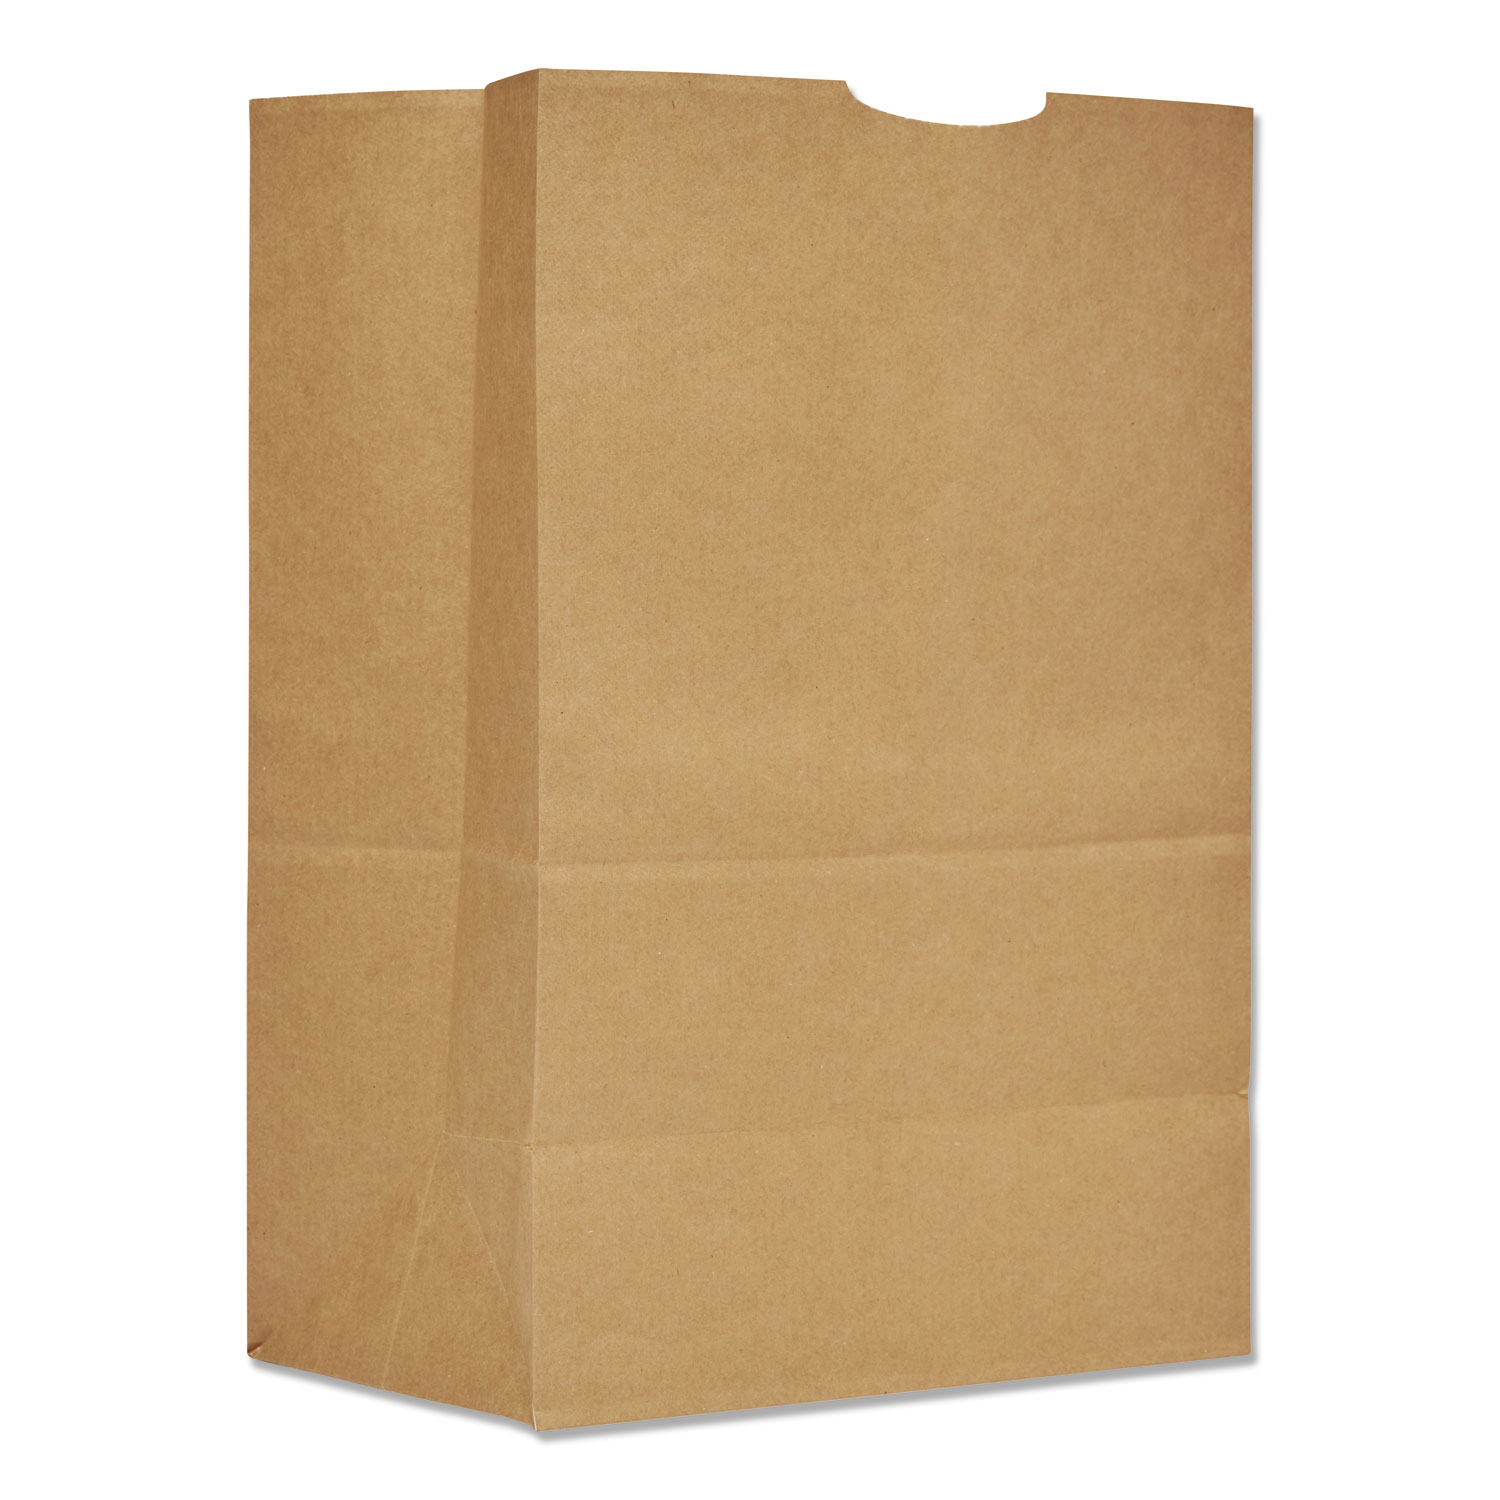  General 80080 Grocery Paper Bags, 75 lbs Capacity, 1/6 BBL, 12w x 7d x 17h, Kraft, 400 Bags (BAGSK1675) 